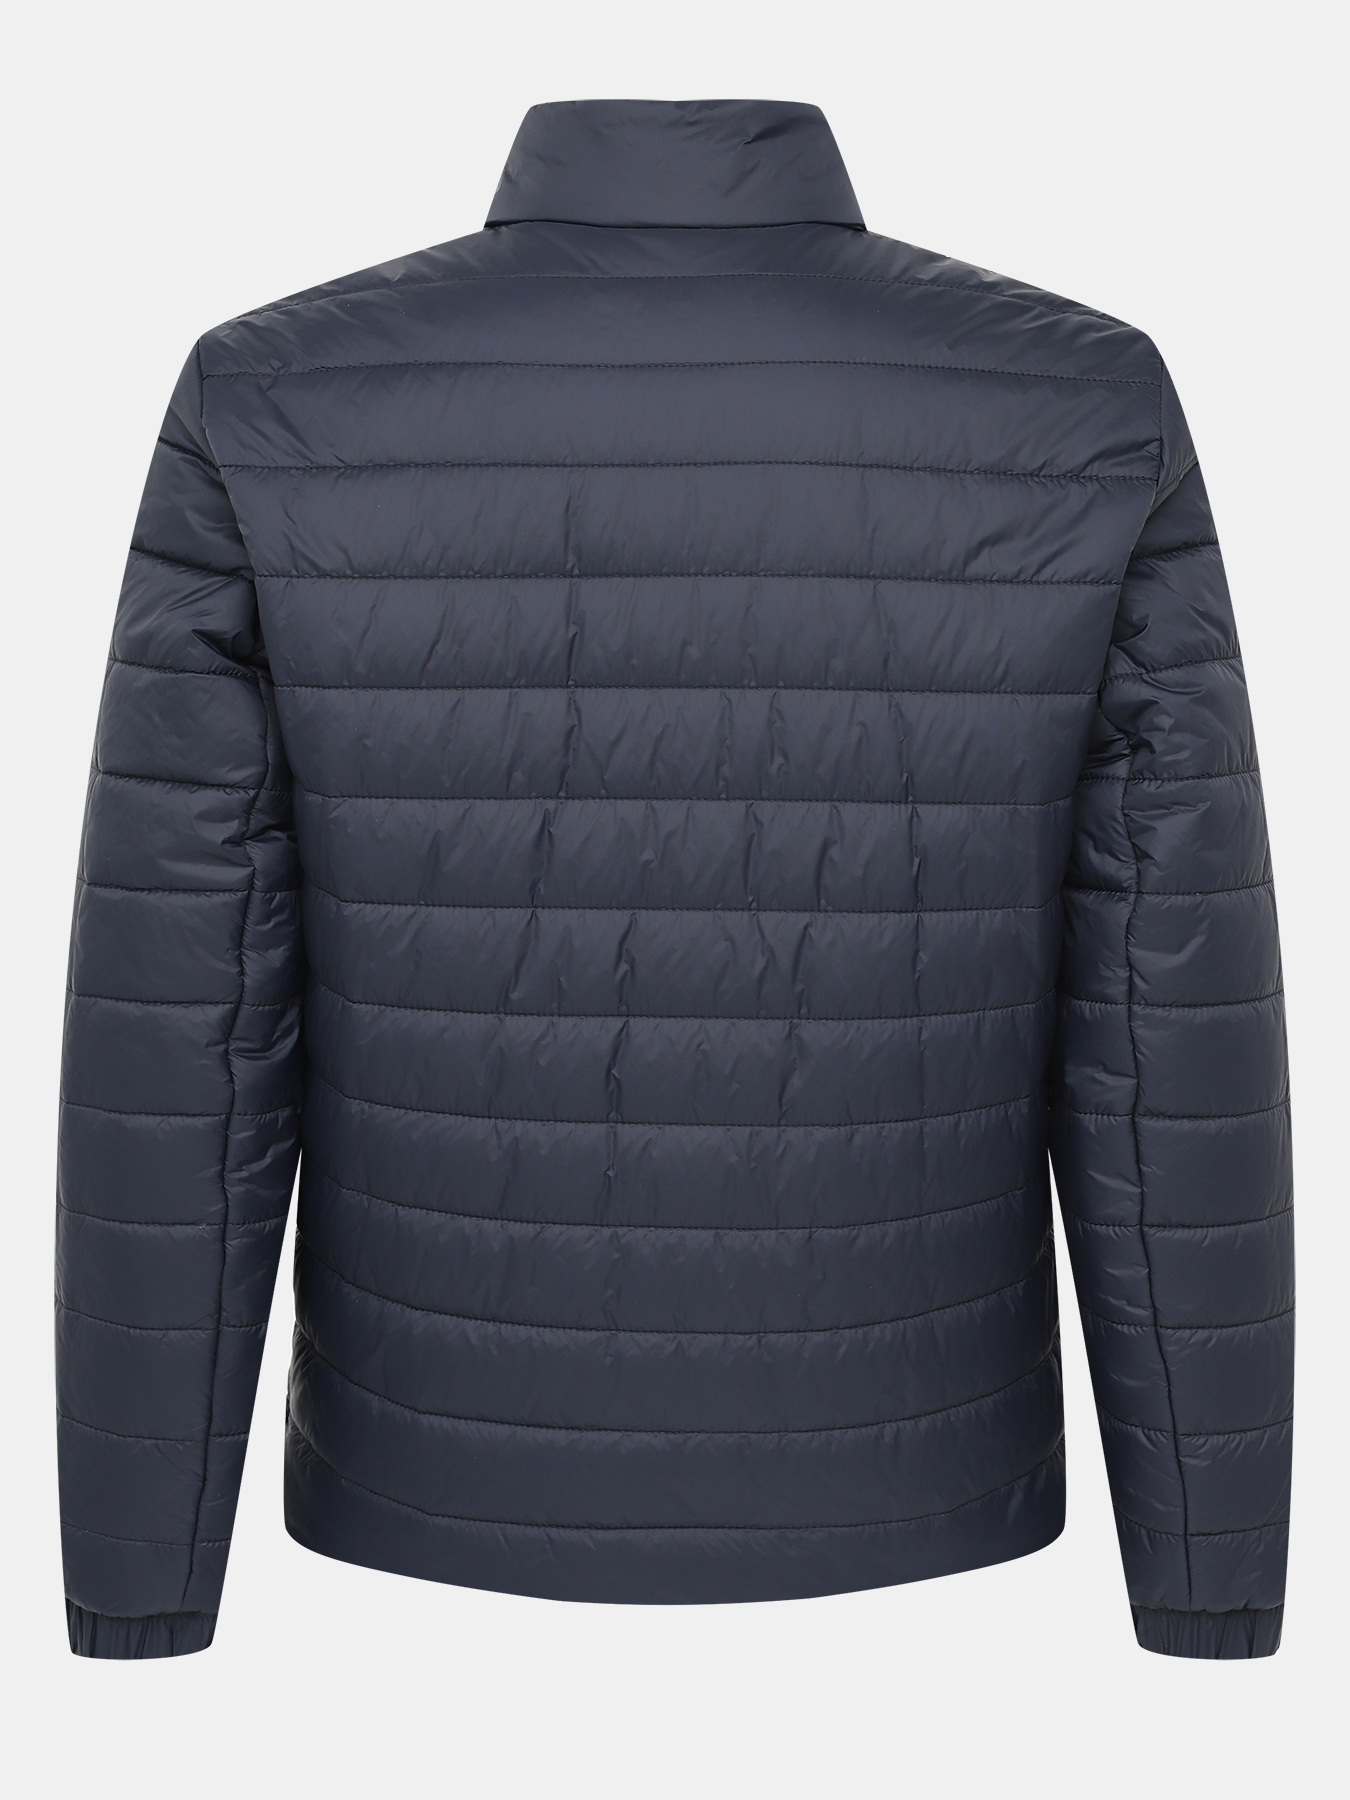 Куртка Benti HUGO 421240-045, цвет темно-синий, размер 52-54 - фото 2